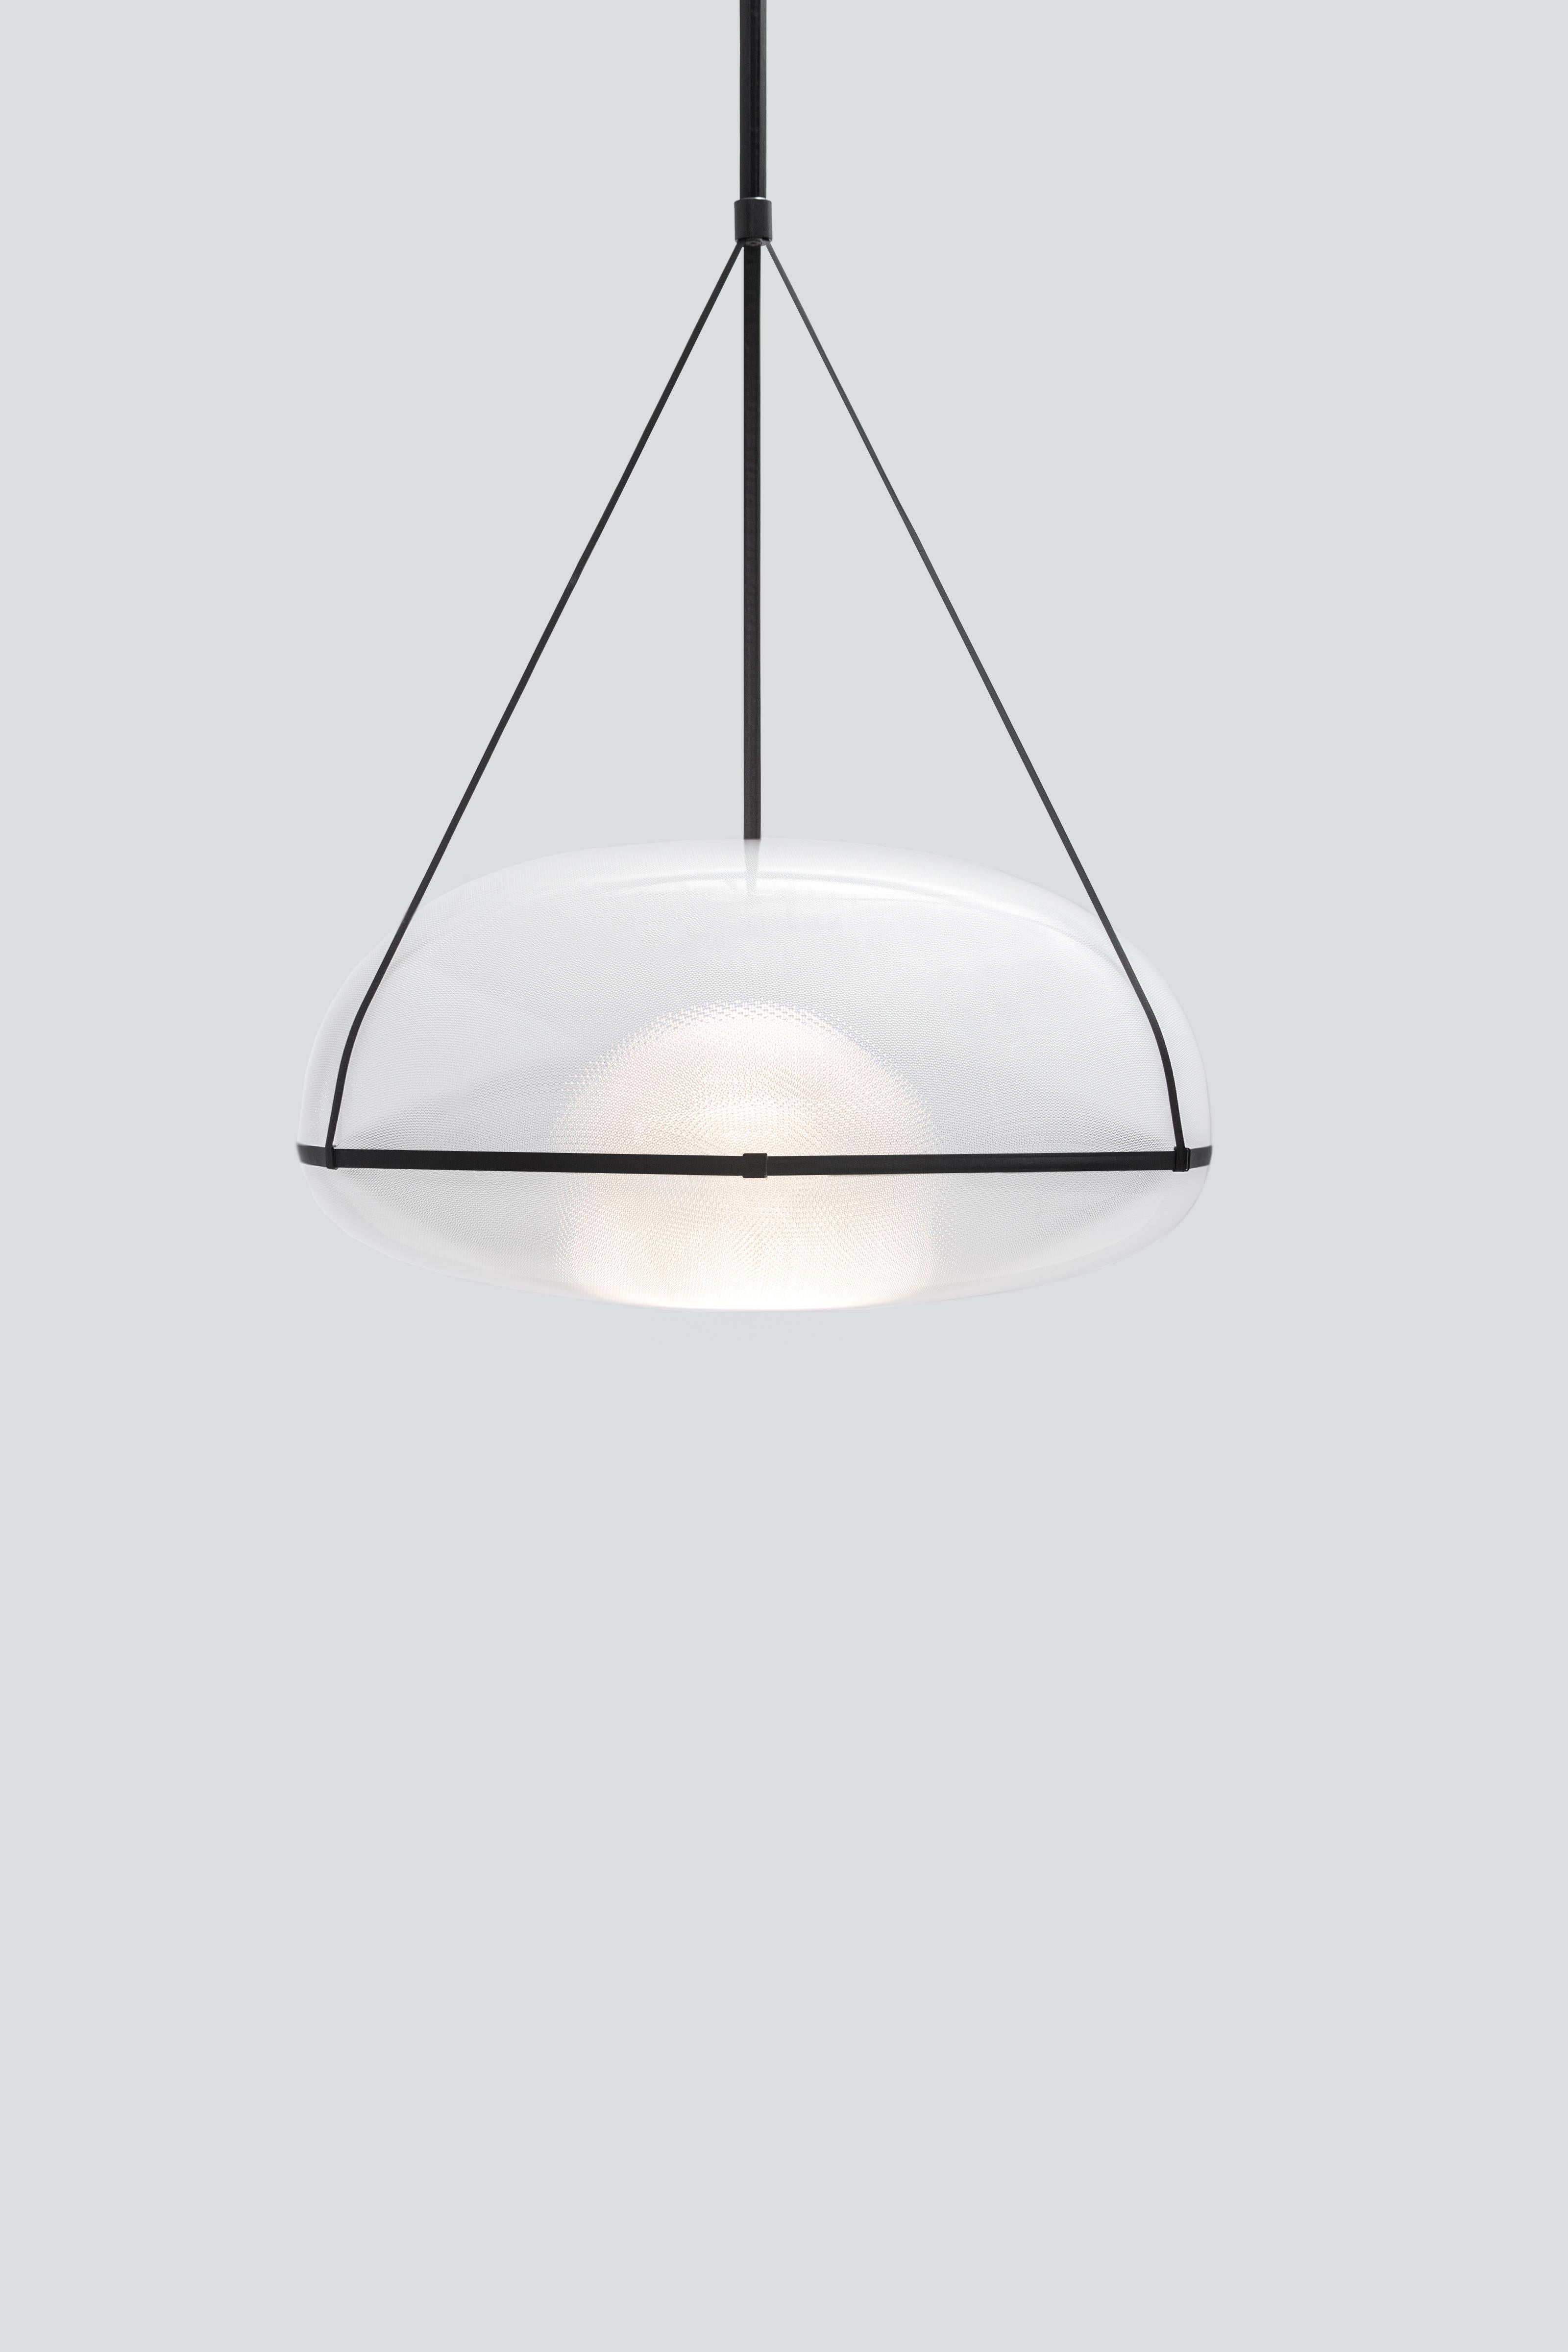 Organic Modern Contemporary Black Pendant Lamp 'Iris', A/B For Sale